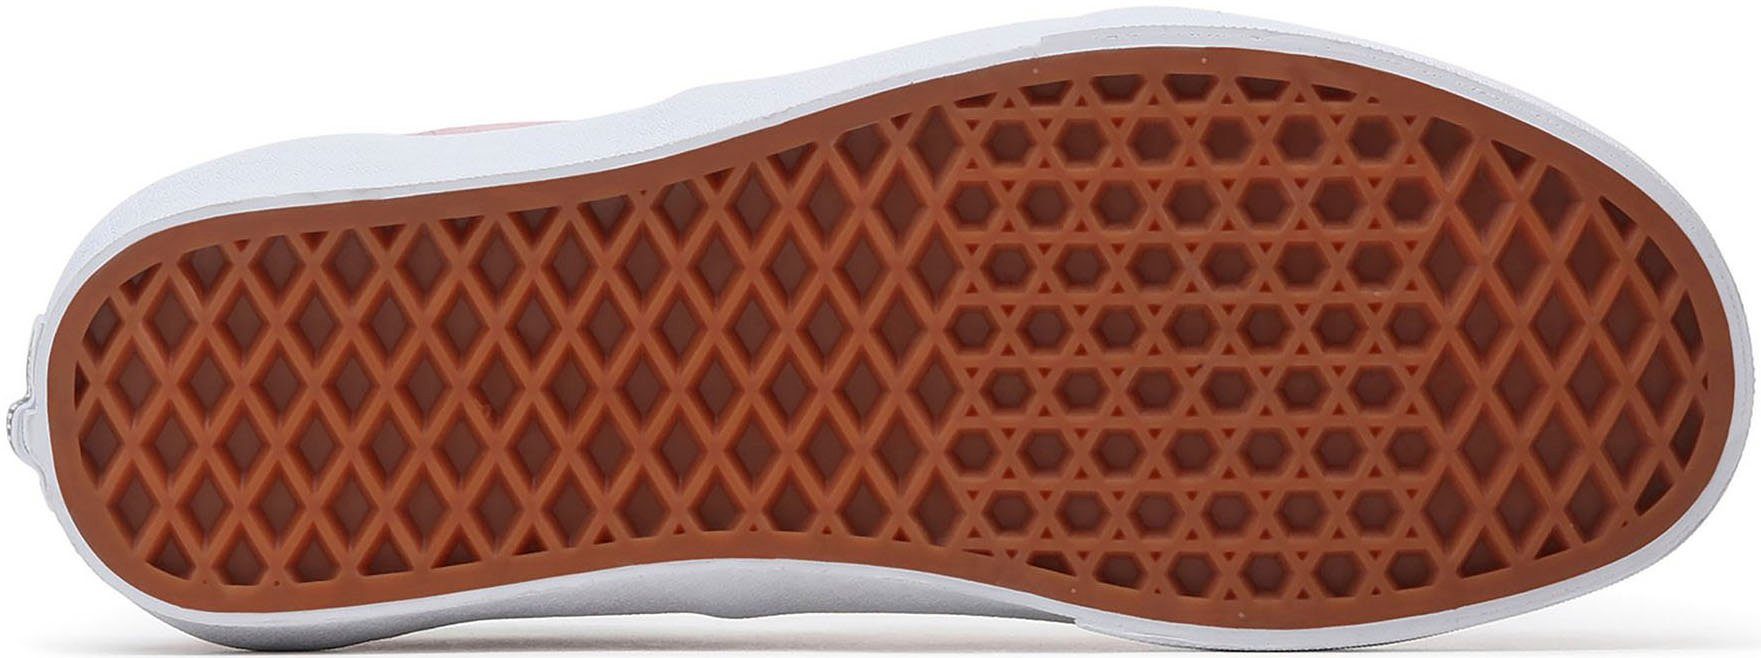 Canvas-Material aus Sneaker Vans textilem Era